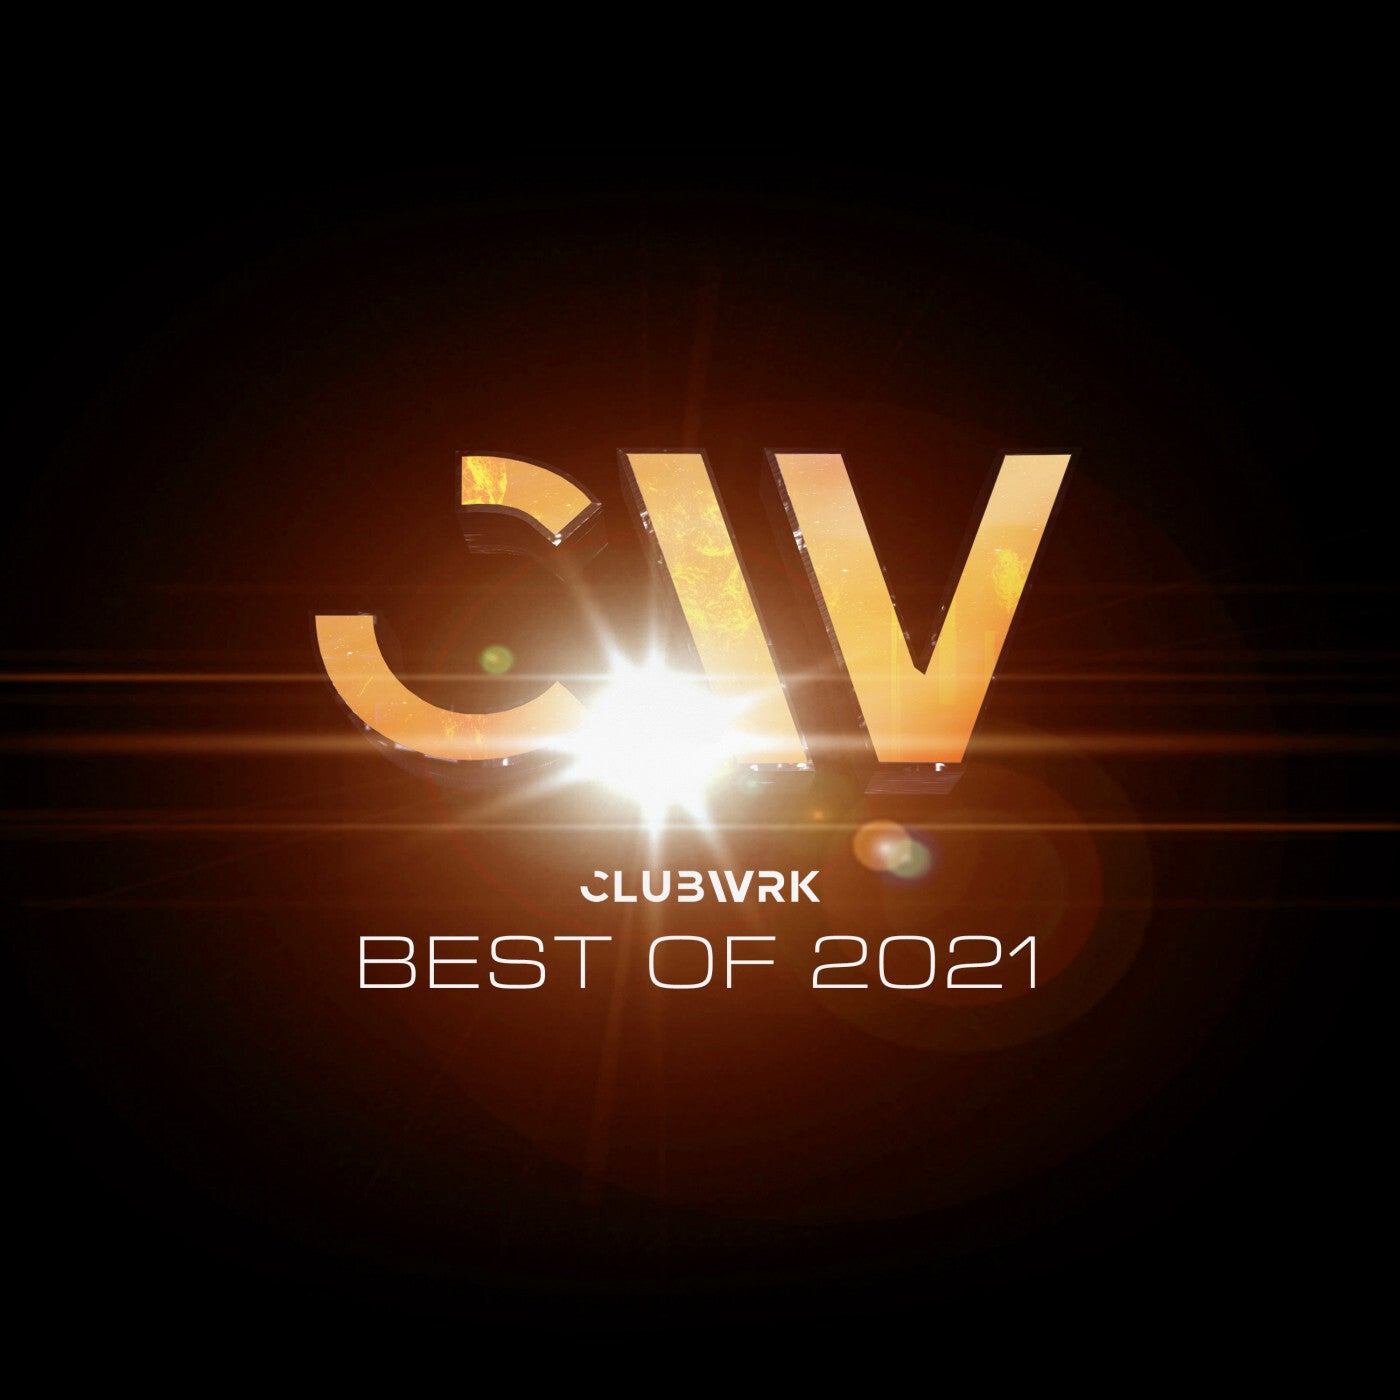 CLUBWRK - Best of 2021